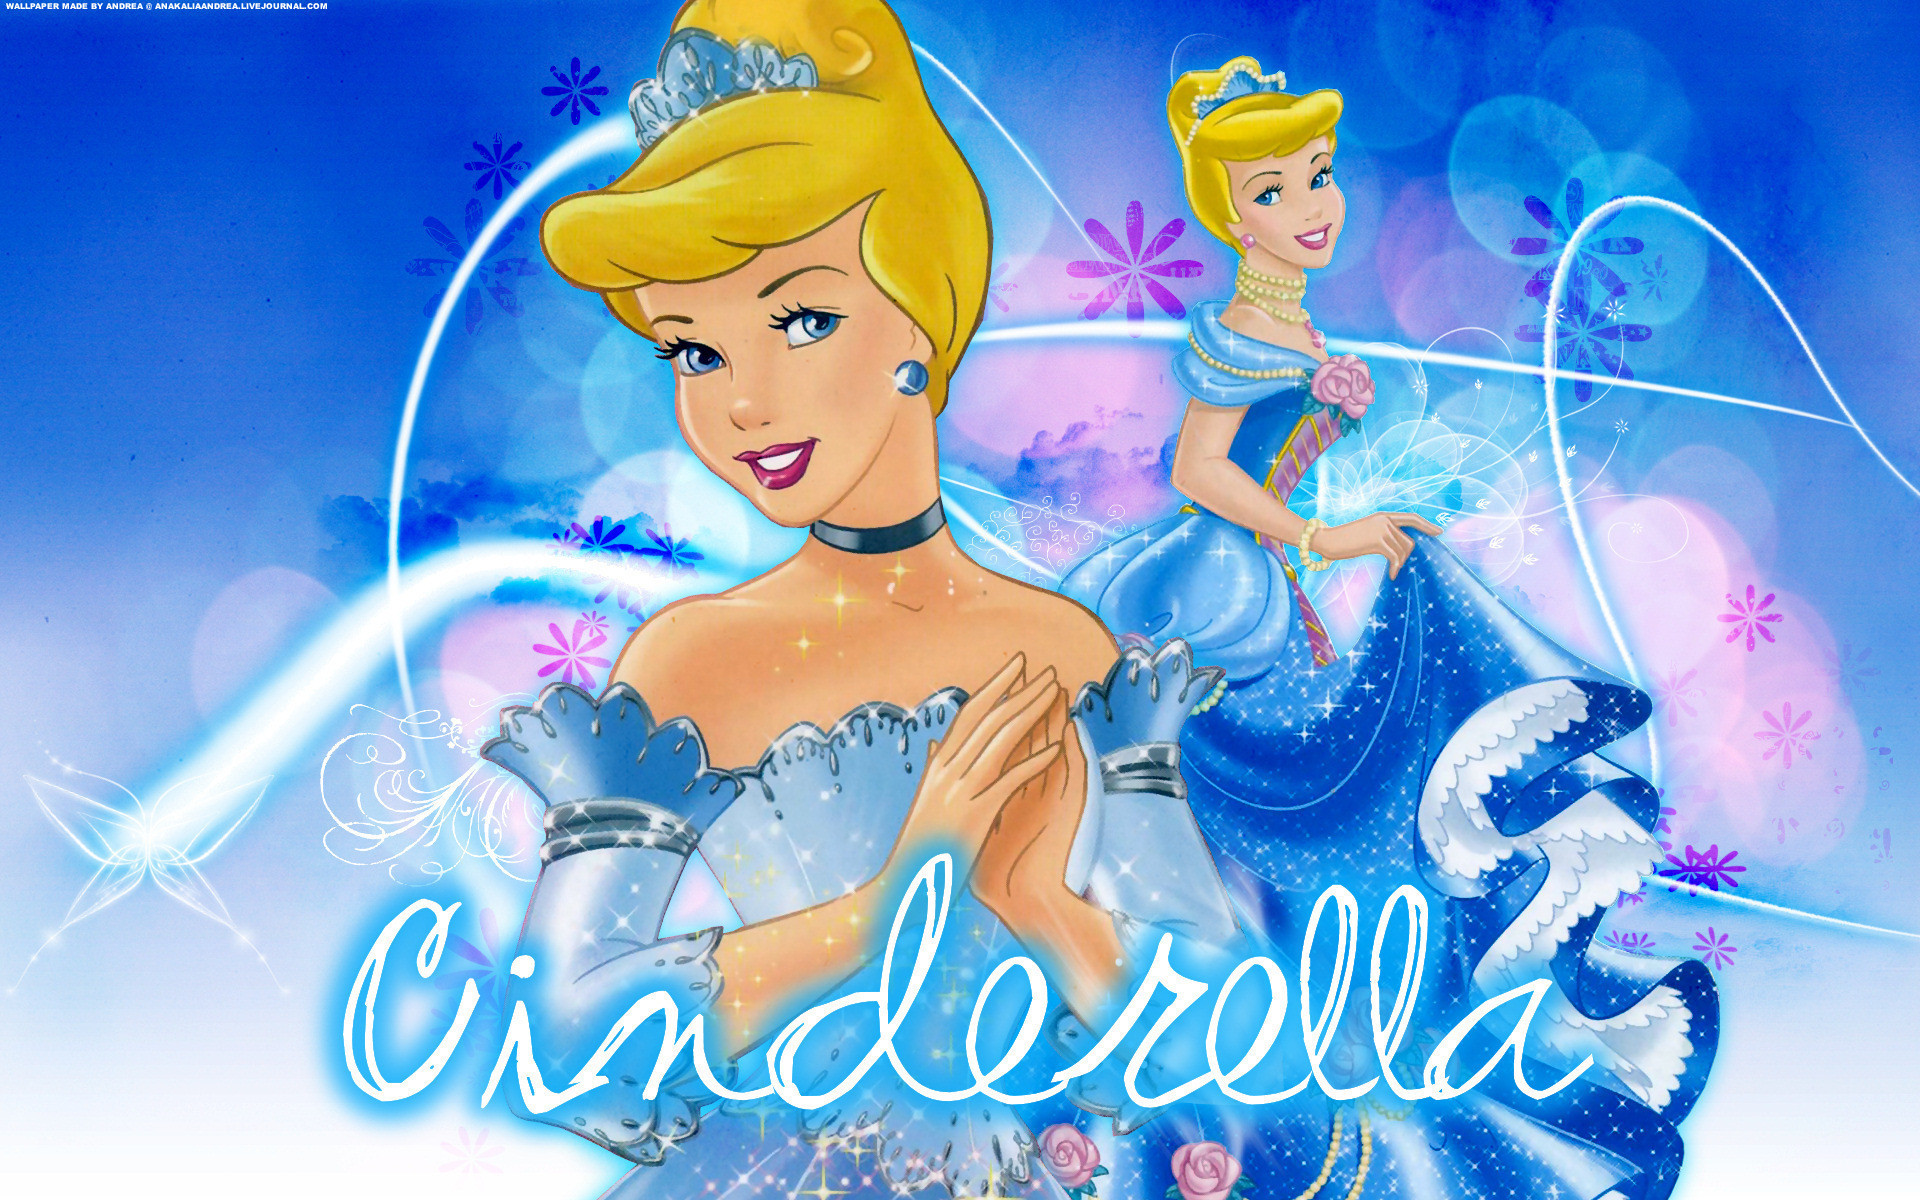 1920x1200  Disney's Cinderella images Cinderella Wallpaper HD wallpaper and  background photos